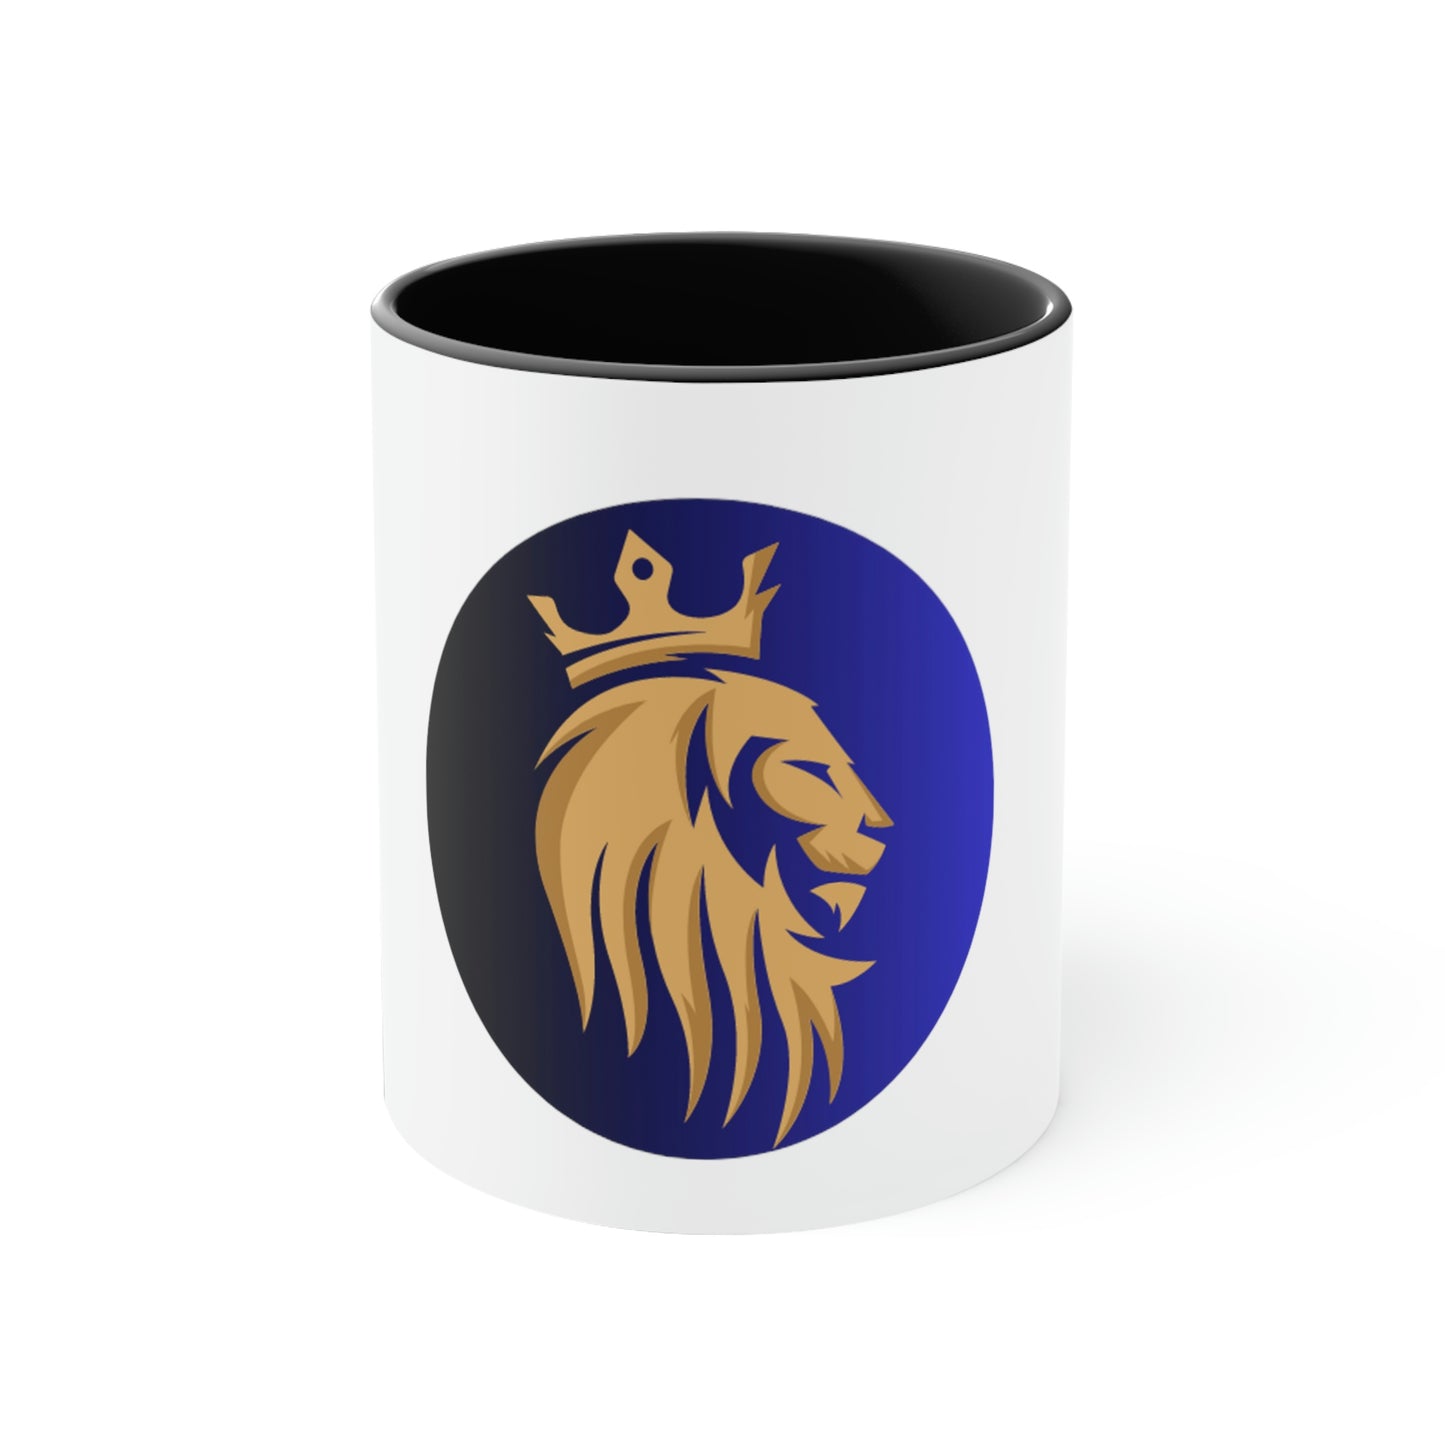 Accent Coffee Mug, 11oz - Gold/Blue Lion